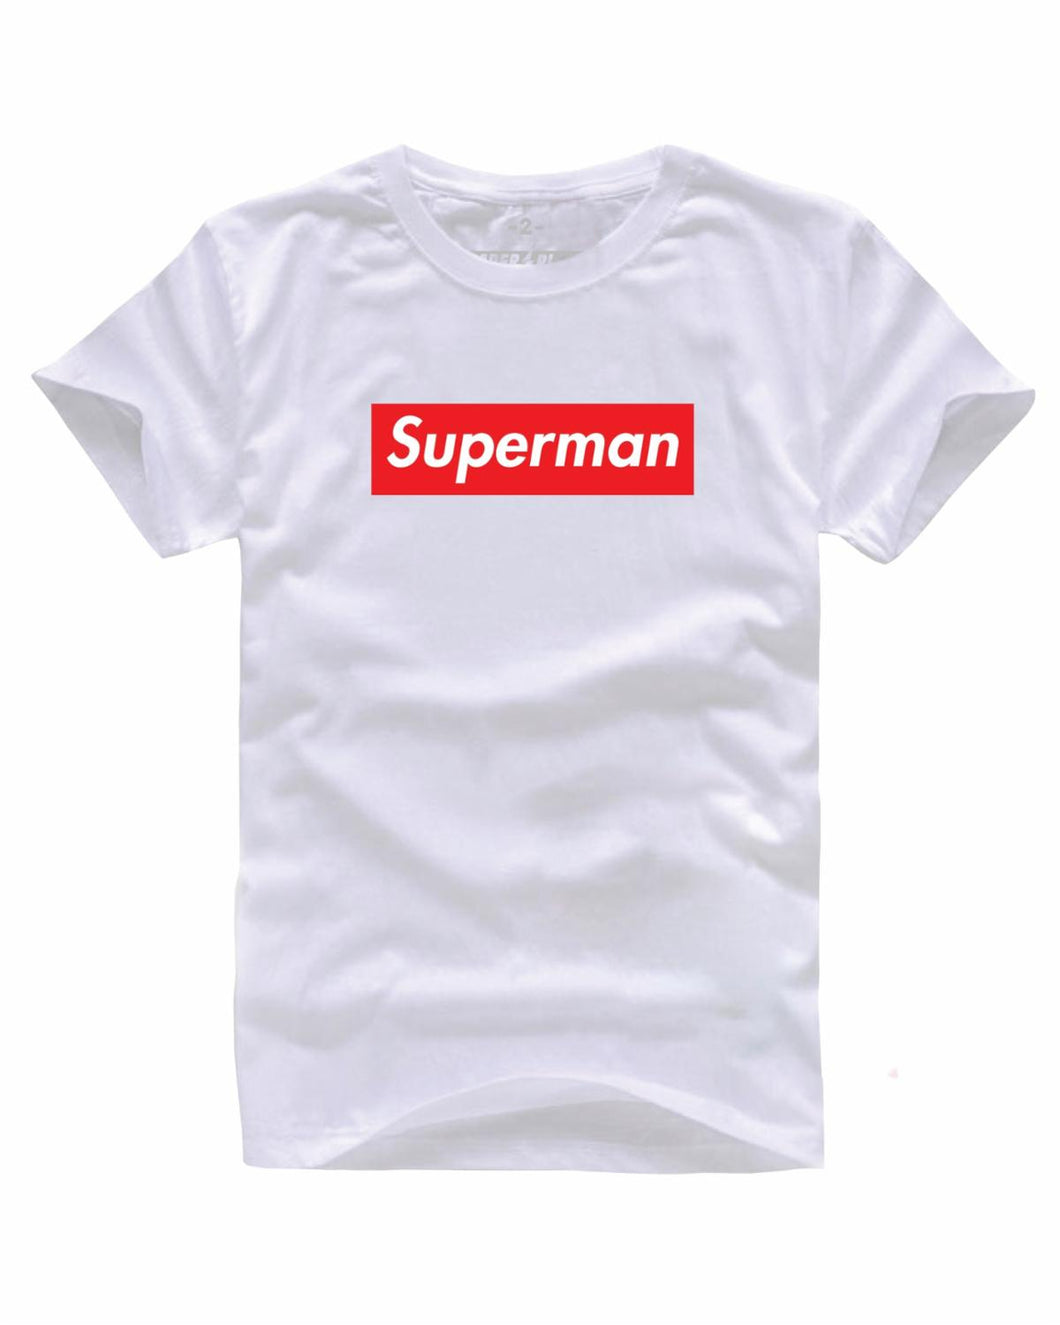 SUPERMAN T-SHIRT